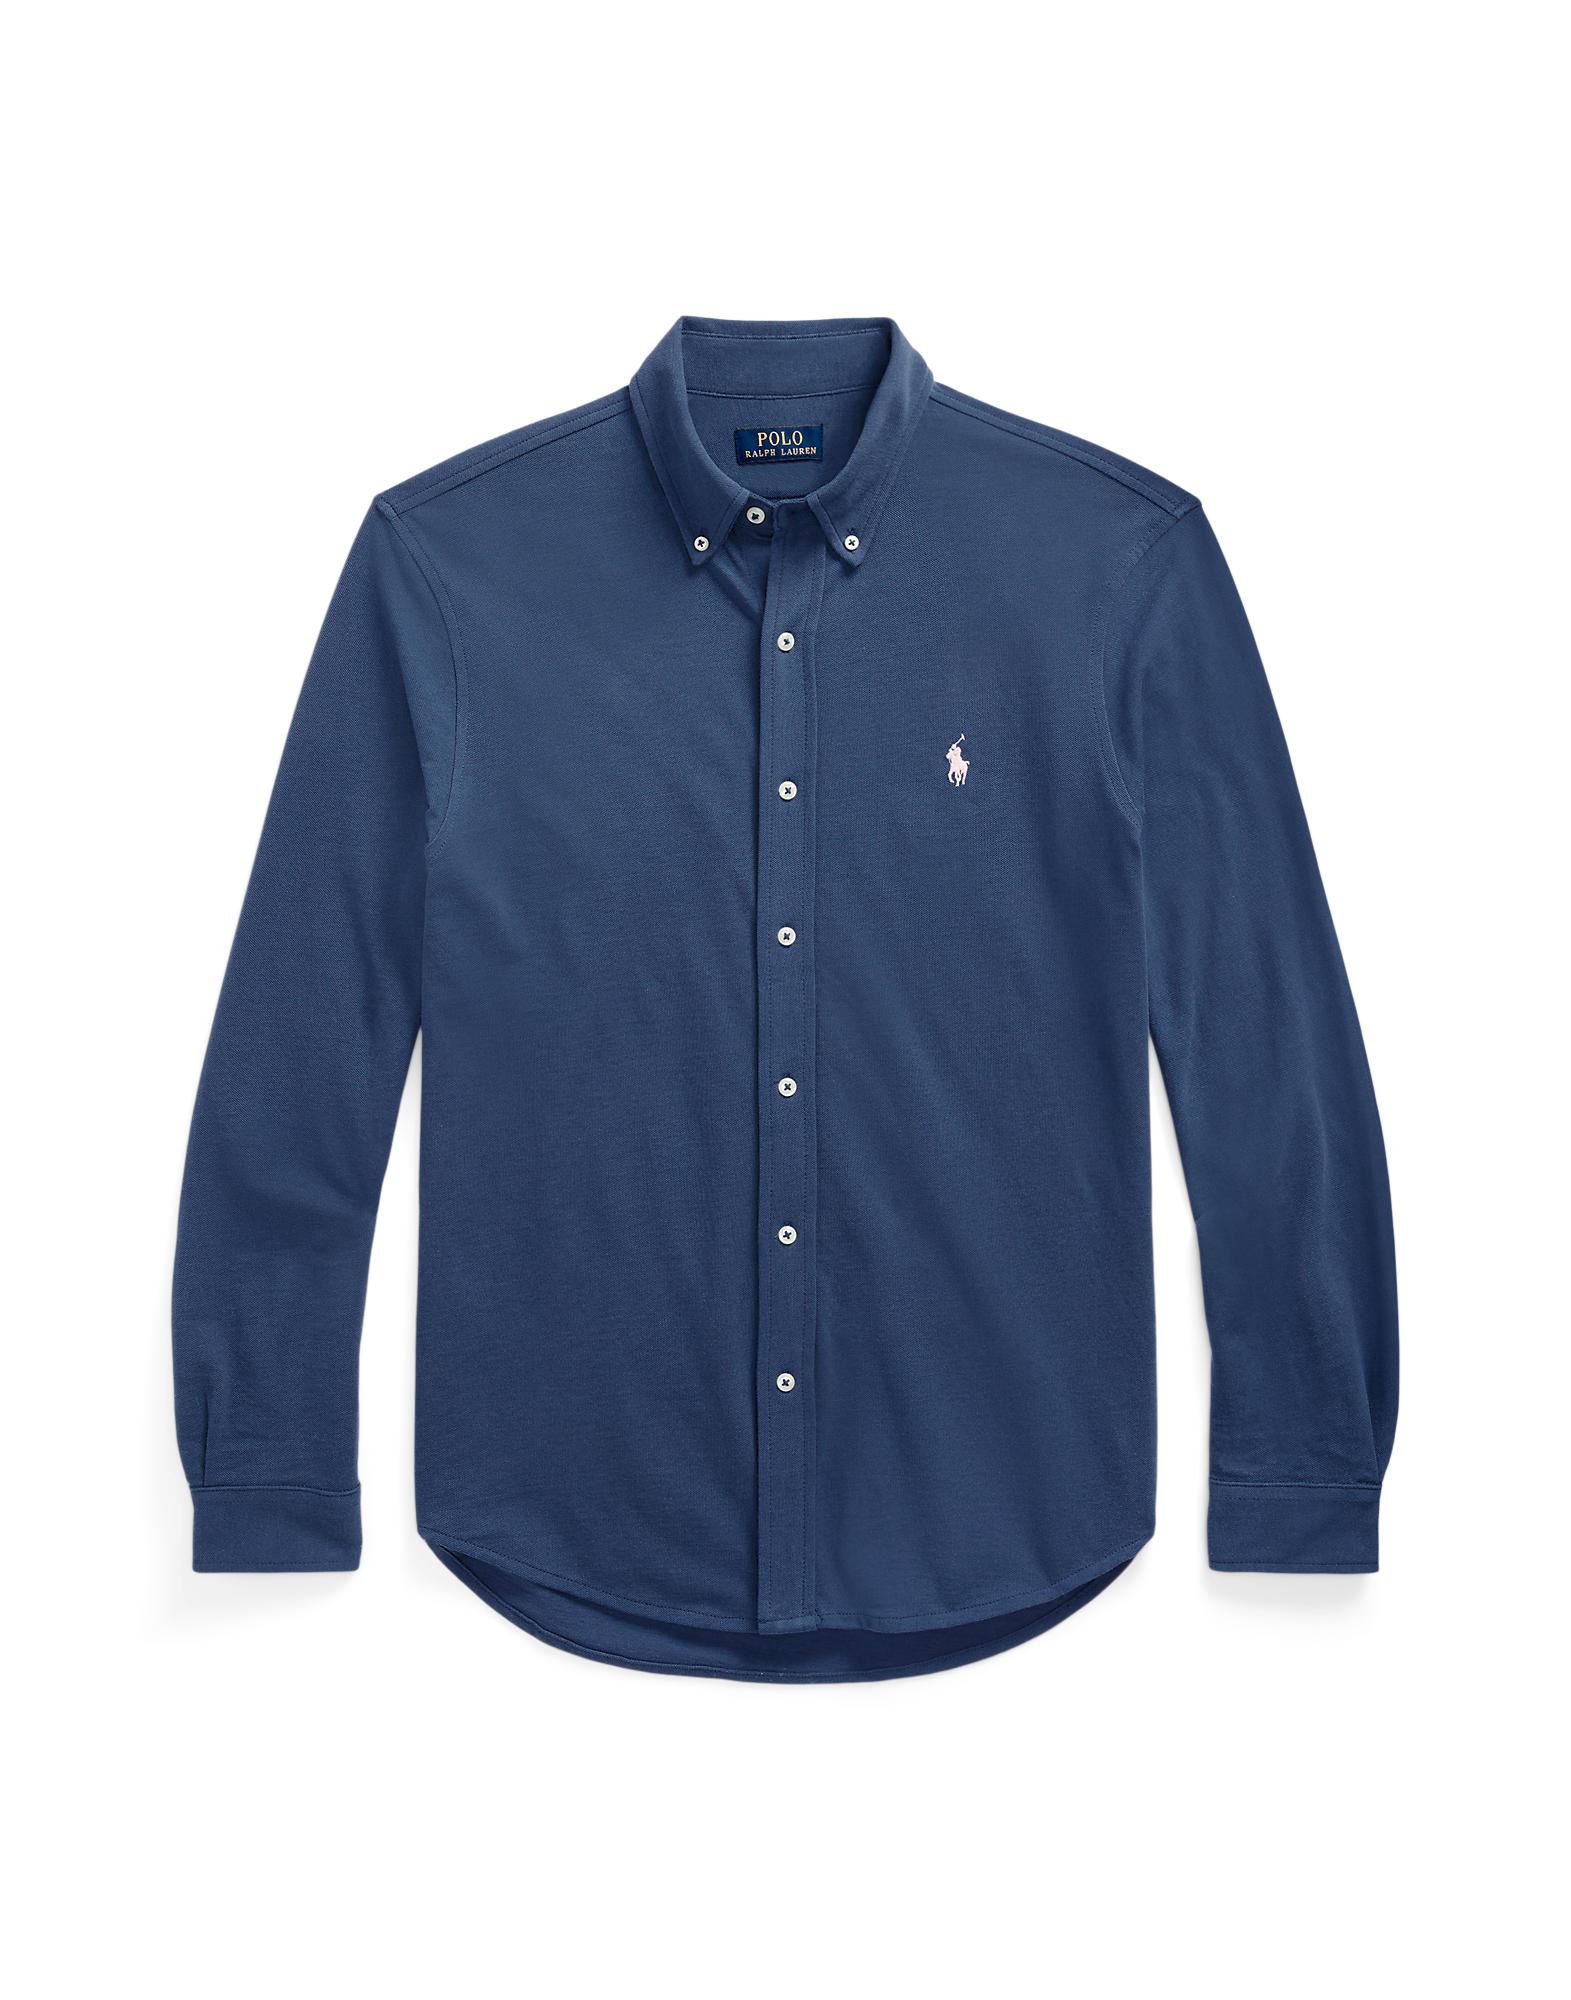 Polo Ralph Lauren Shirts In Navy Blue